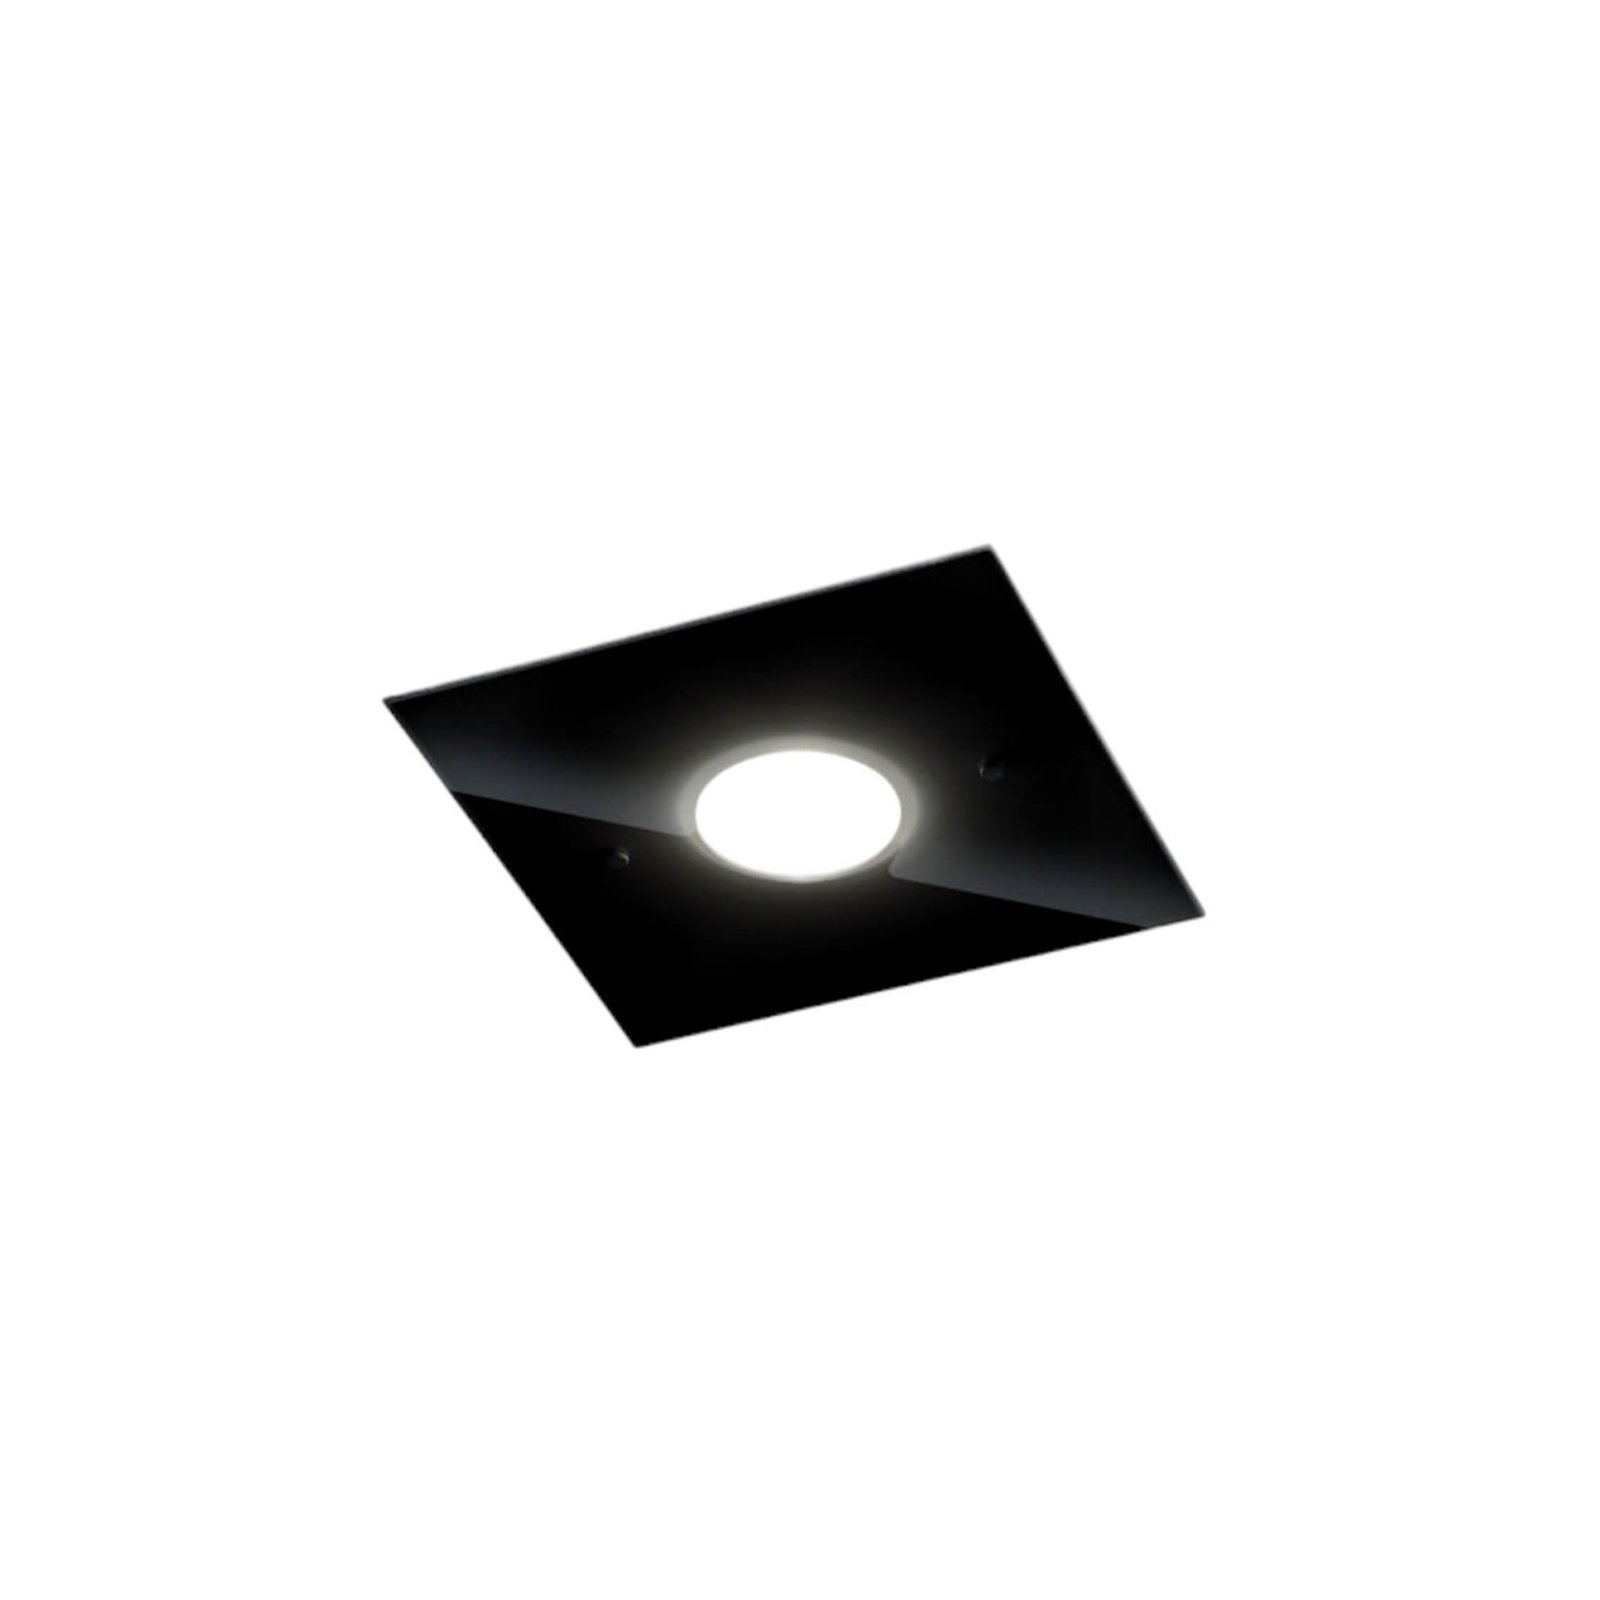 Helestra Nomi plafonnier LED 23x23 cm dim noir